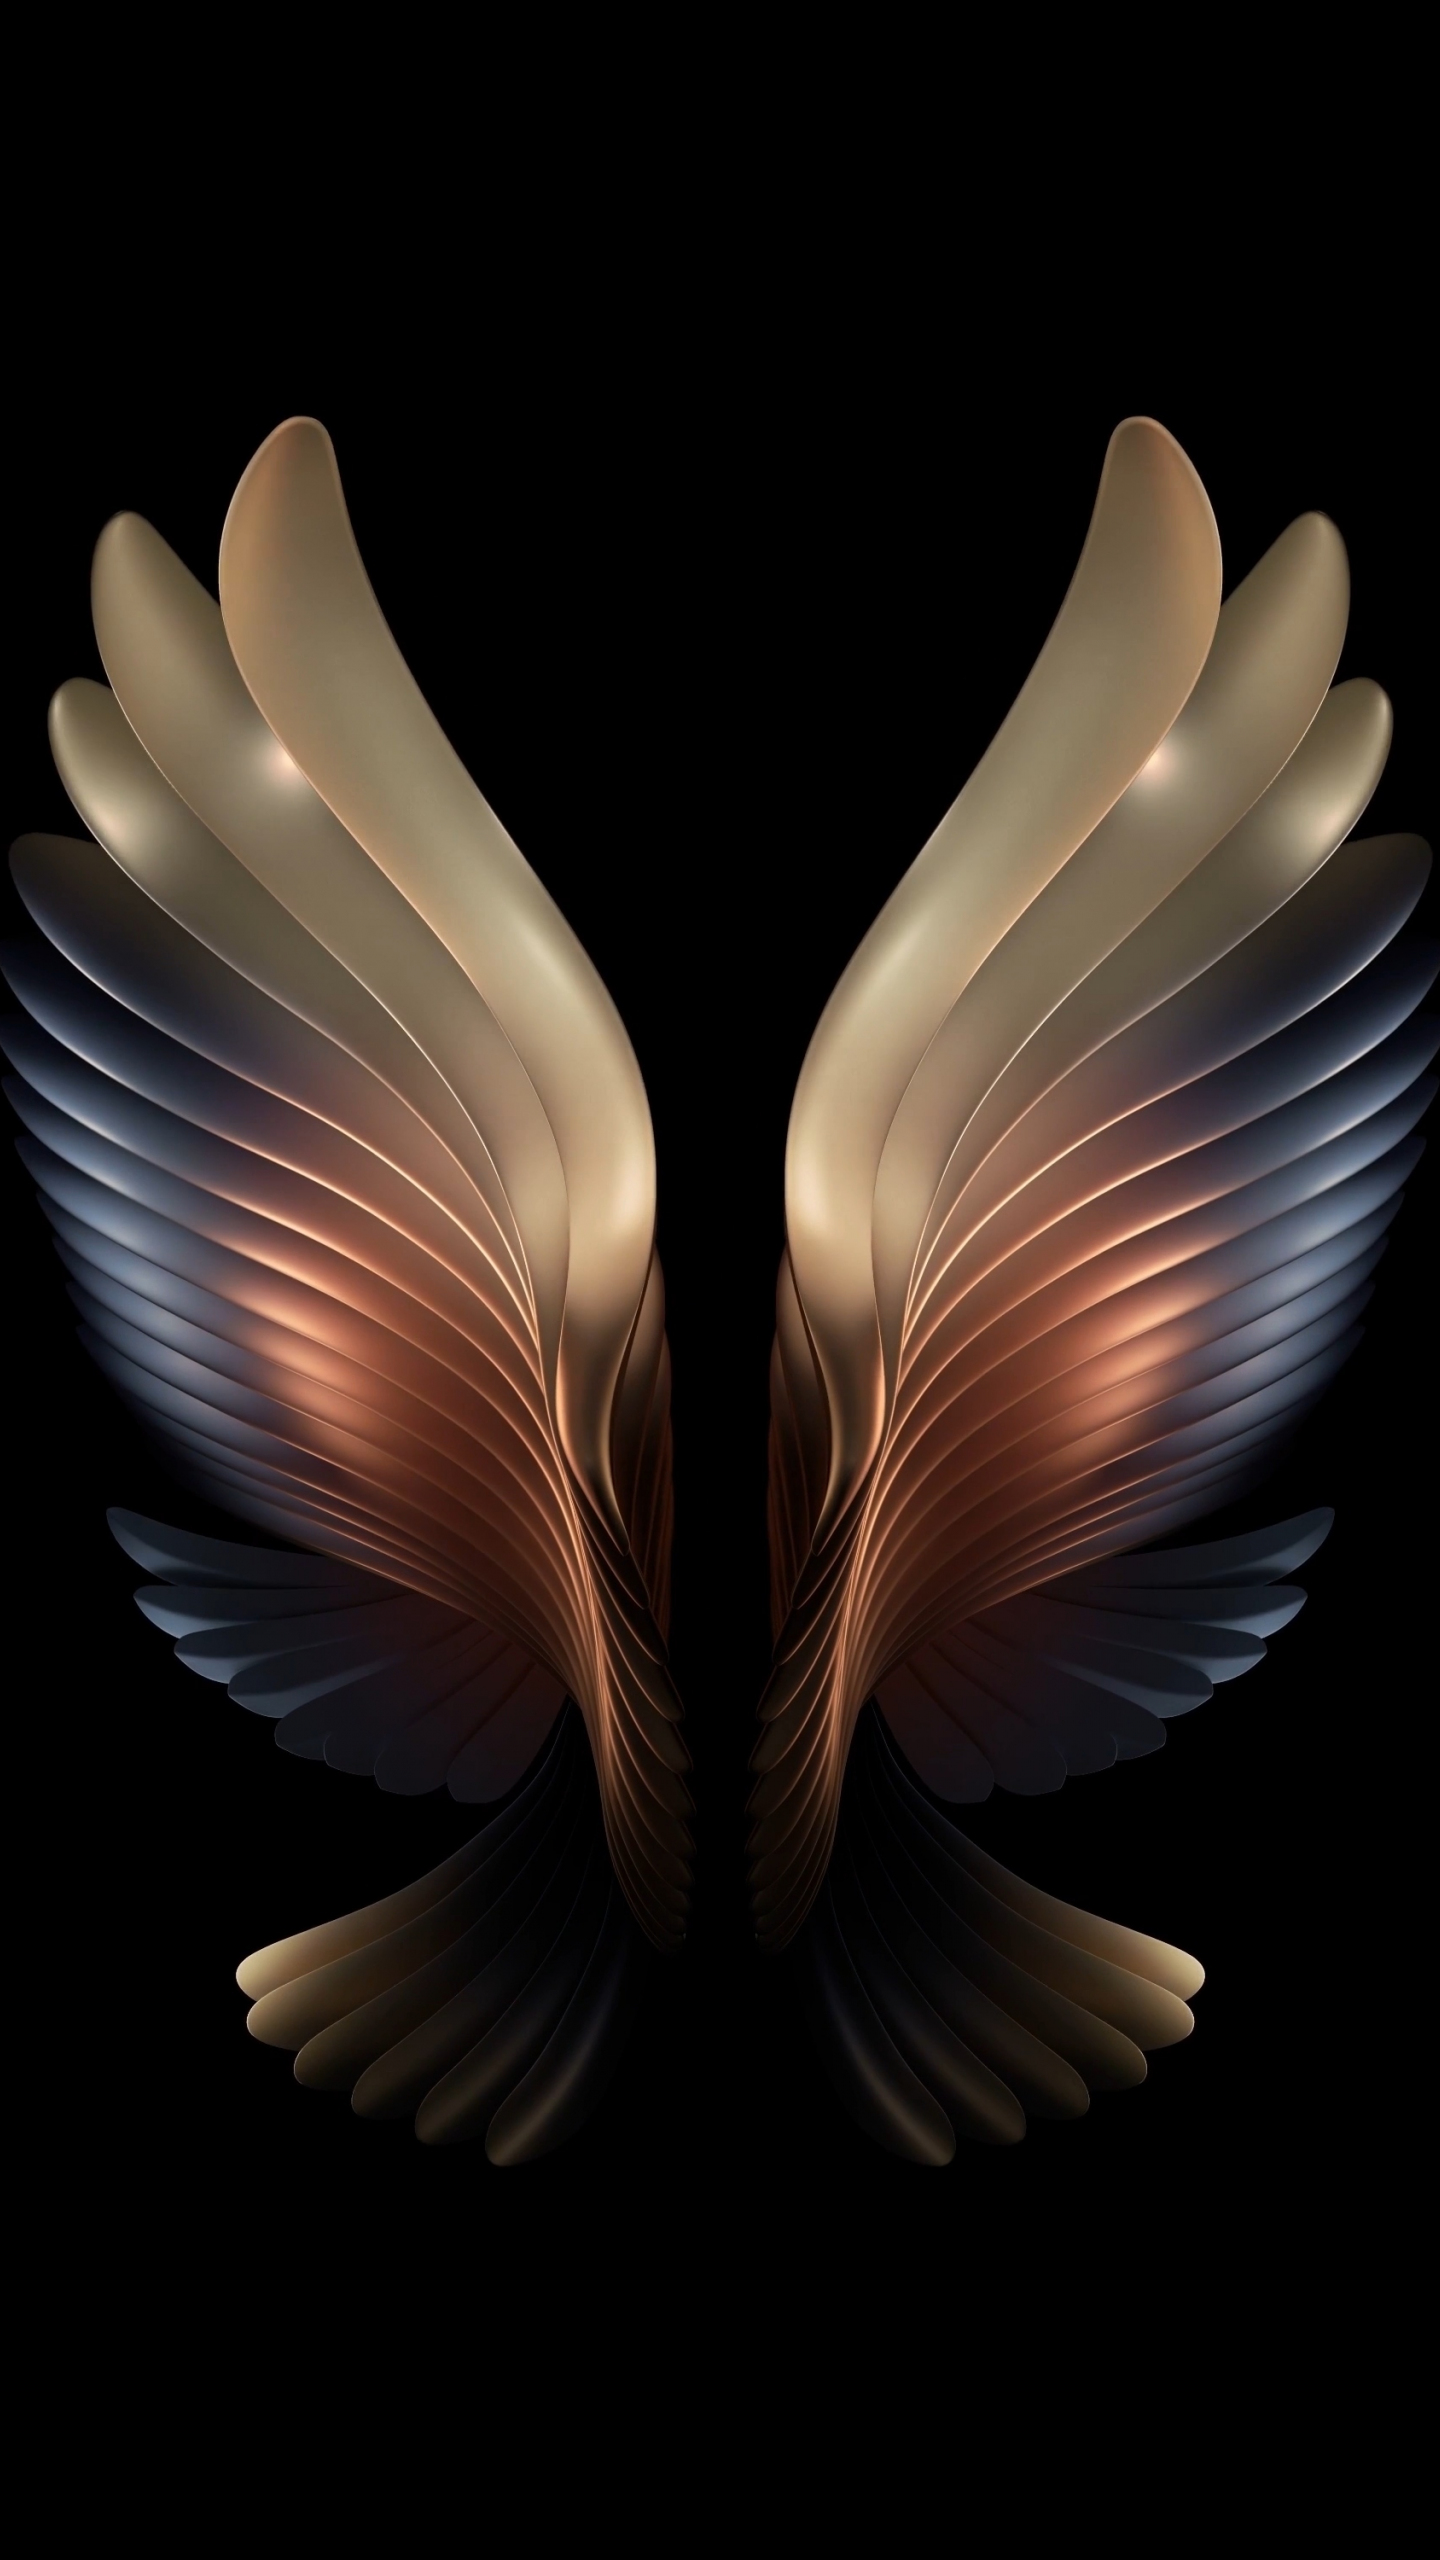 Amoled, angel wings, dark, 1440x2560 wallpaper